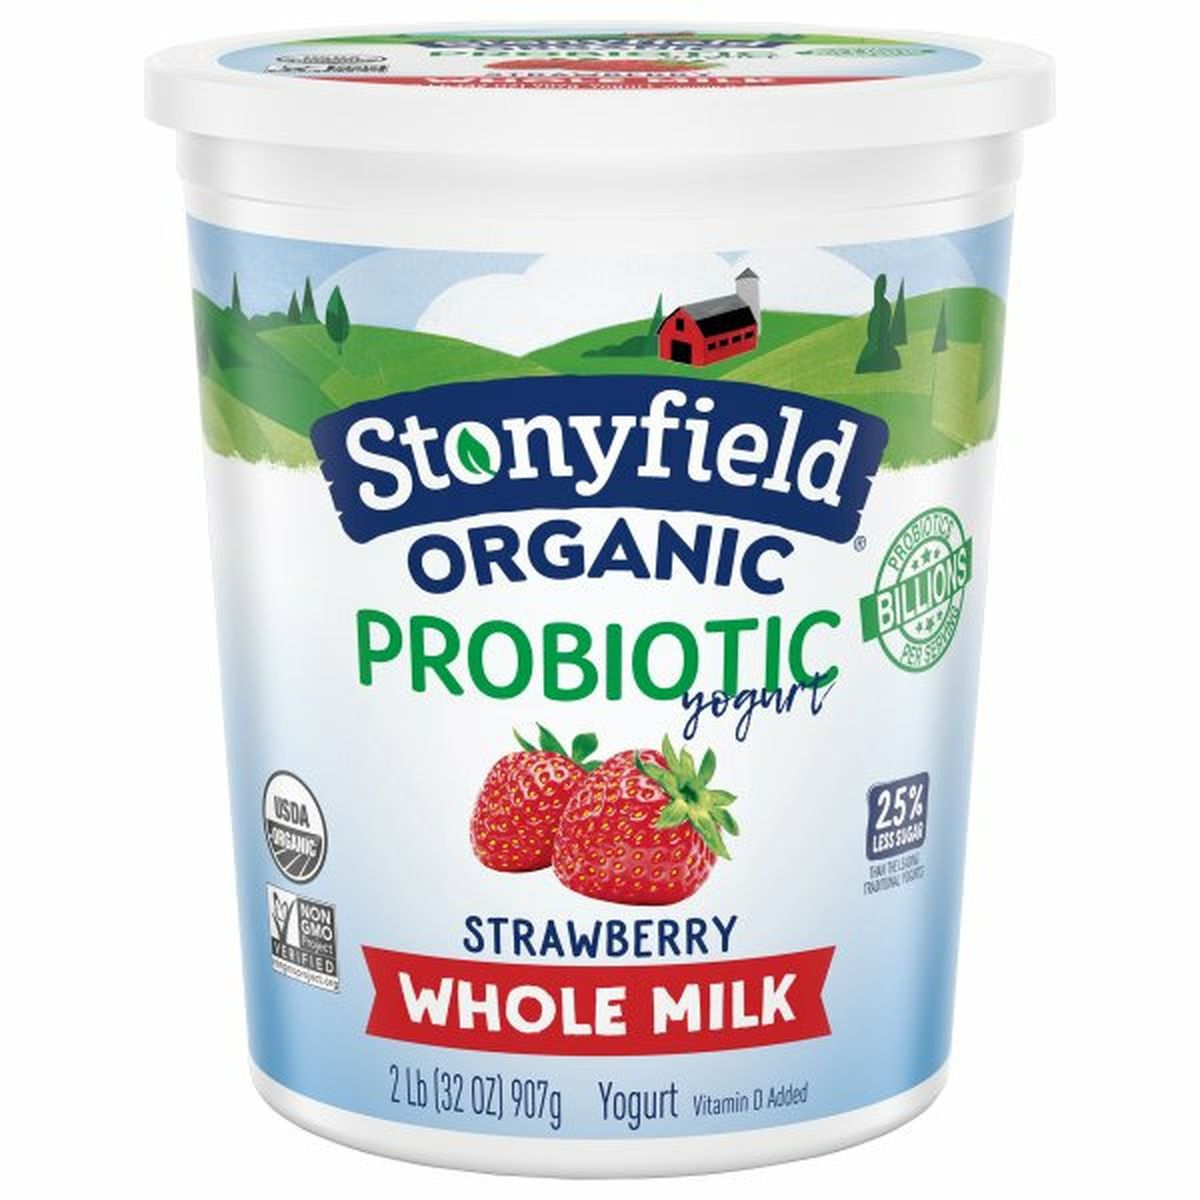 Calories in Stonyfield Organic Yogurt, Whole Milk, Organic, Probiotic, Strawberry